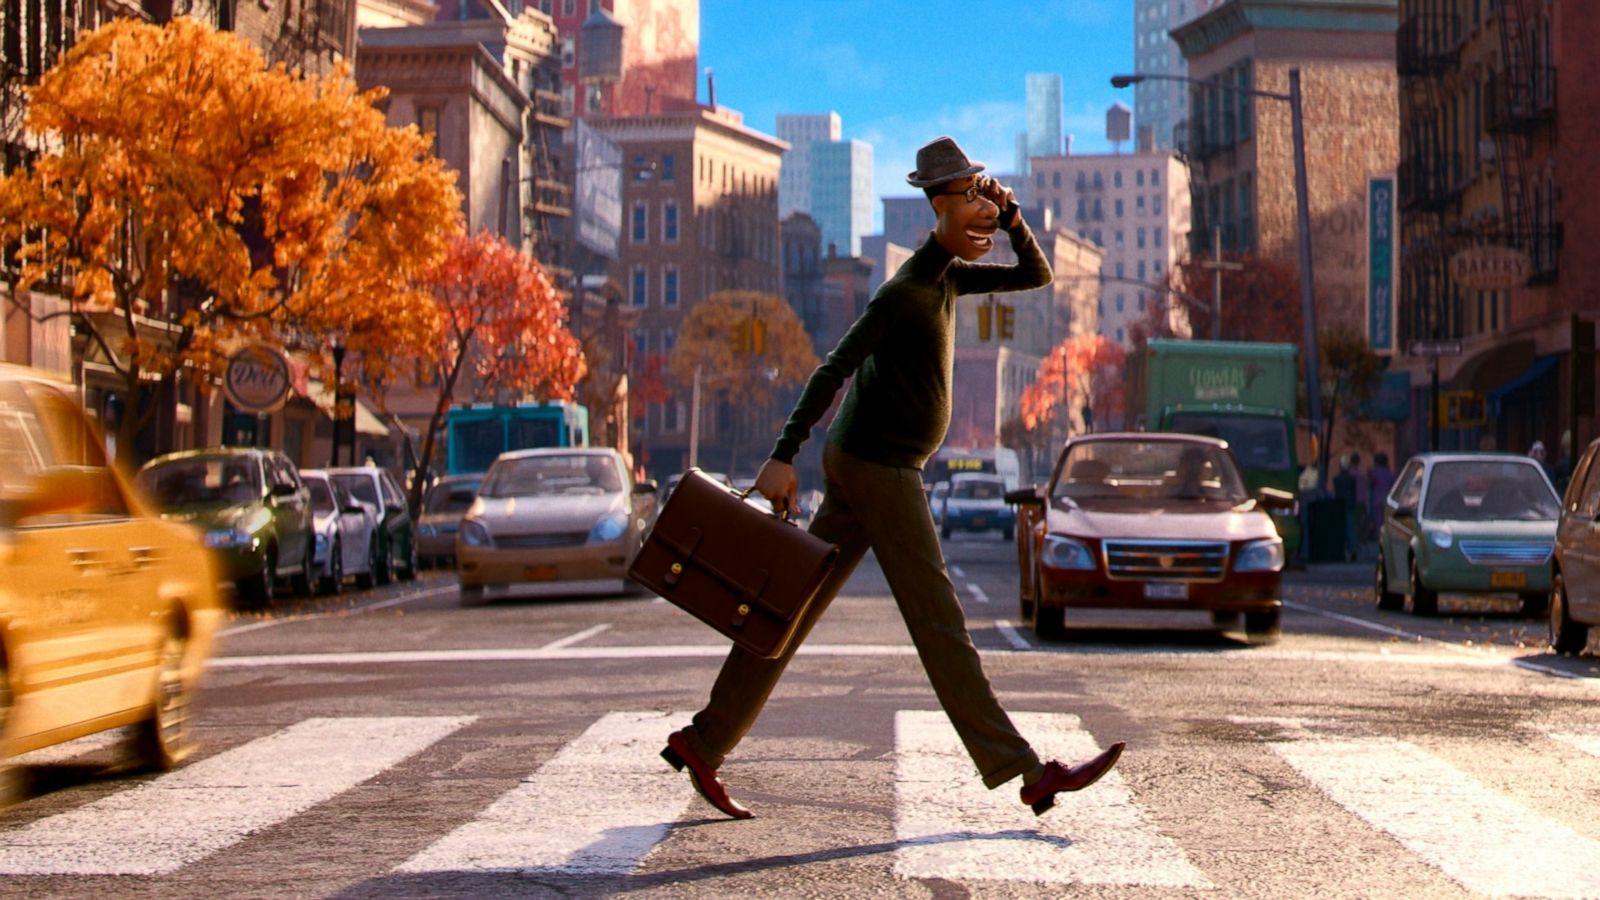 Review: Pixar's 'Soul' Joins Mid Life Crisis, Jazz Fantasia